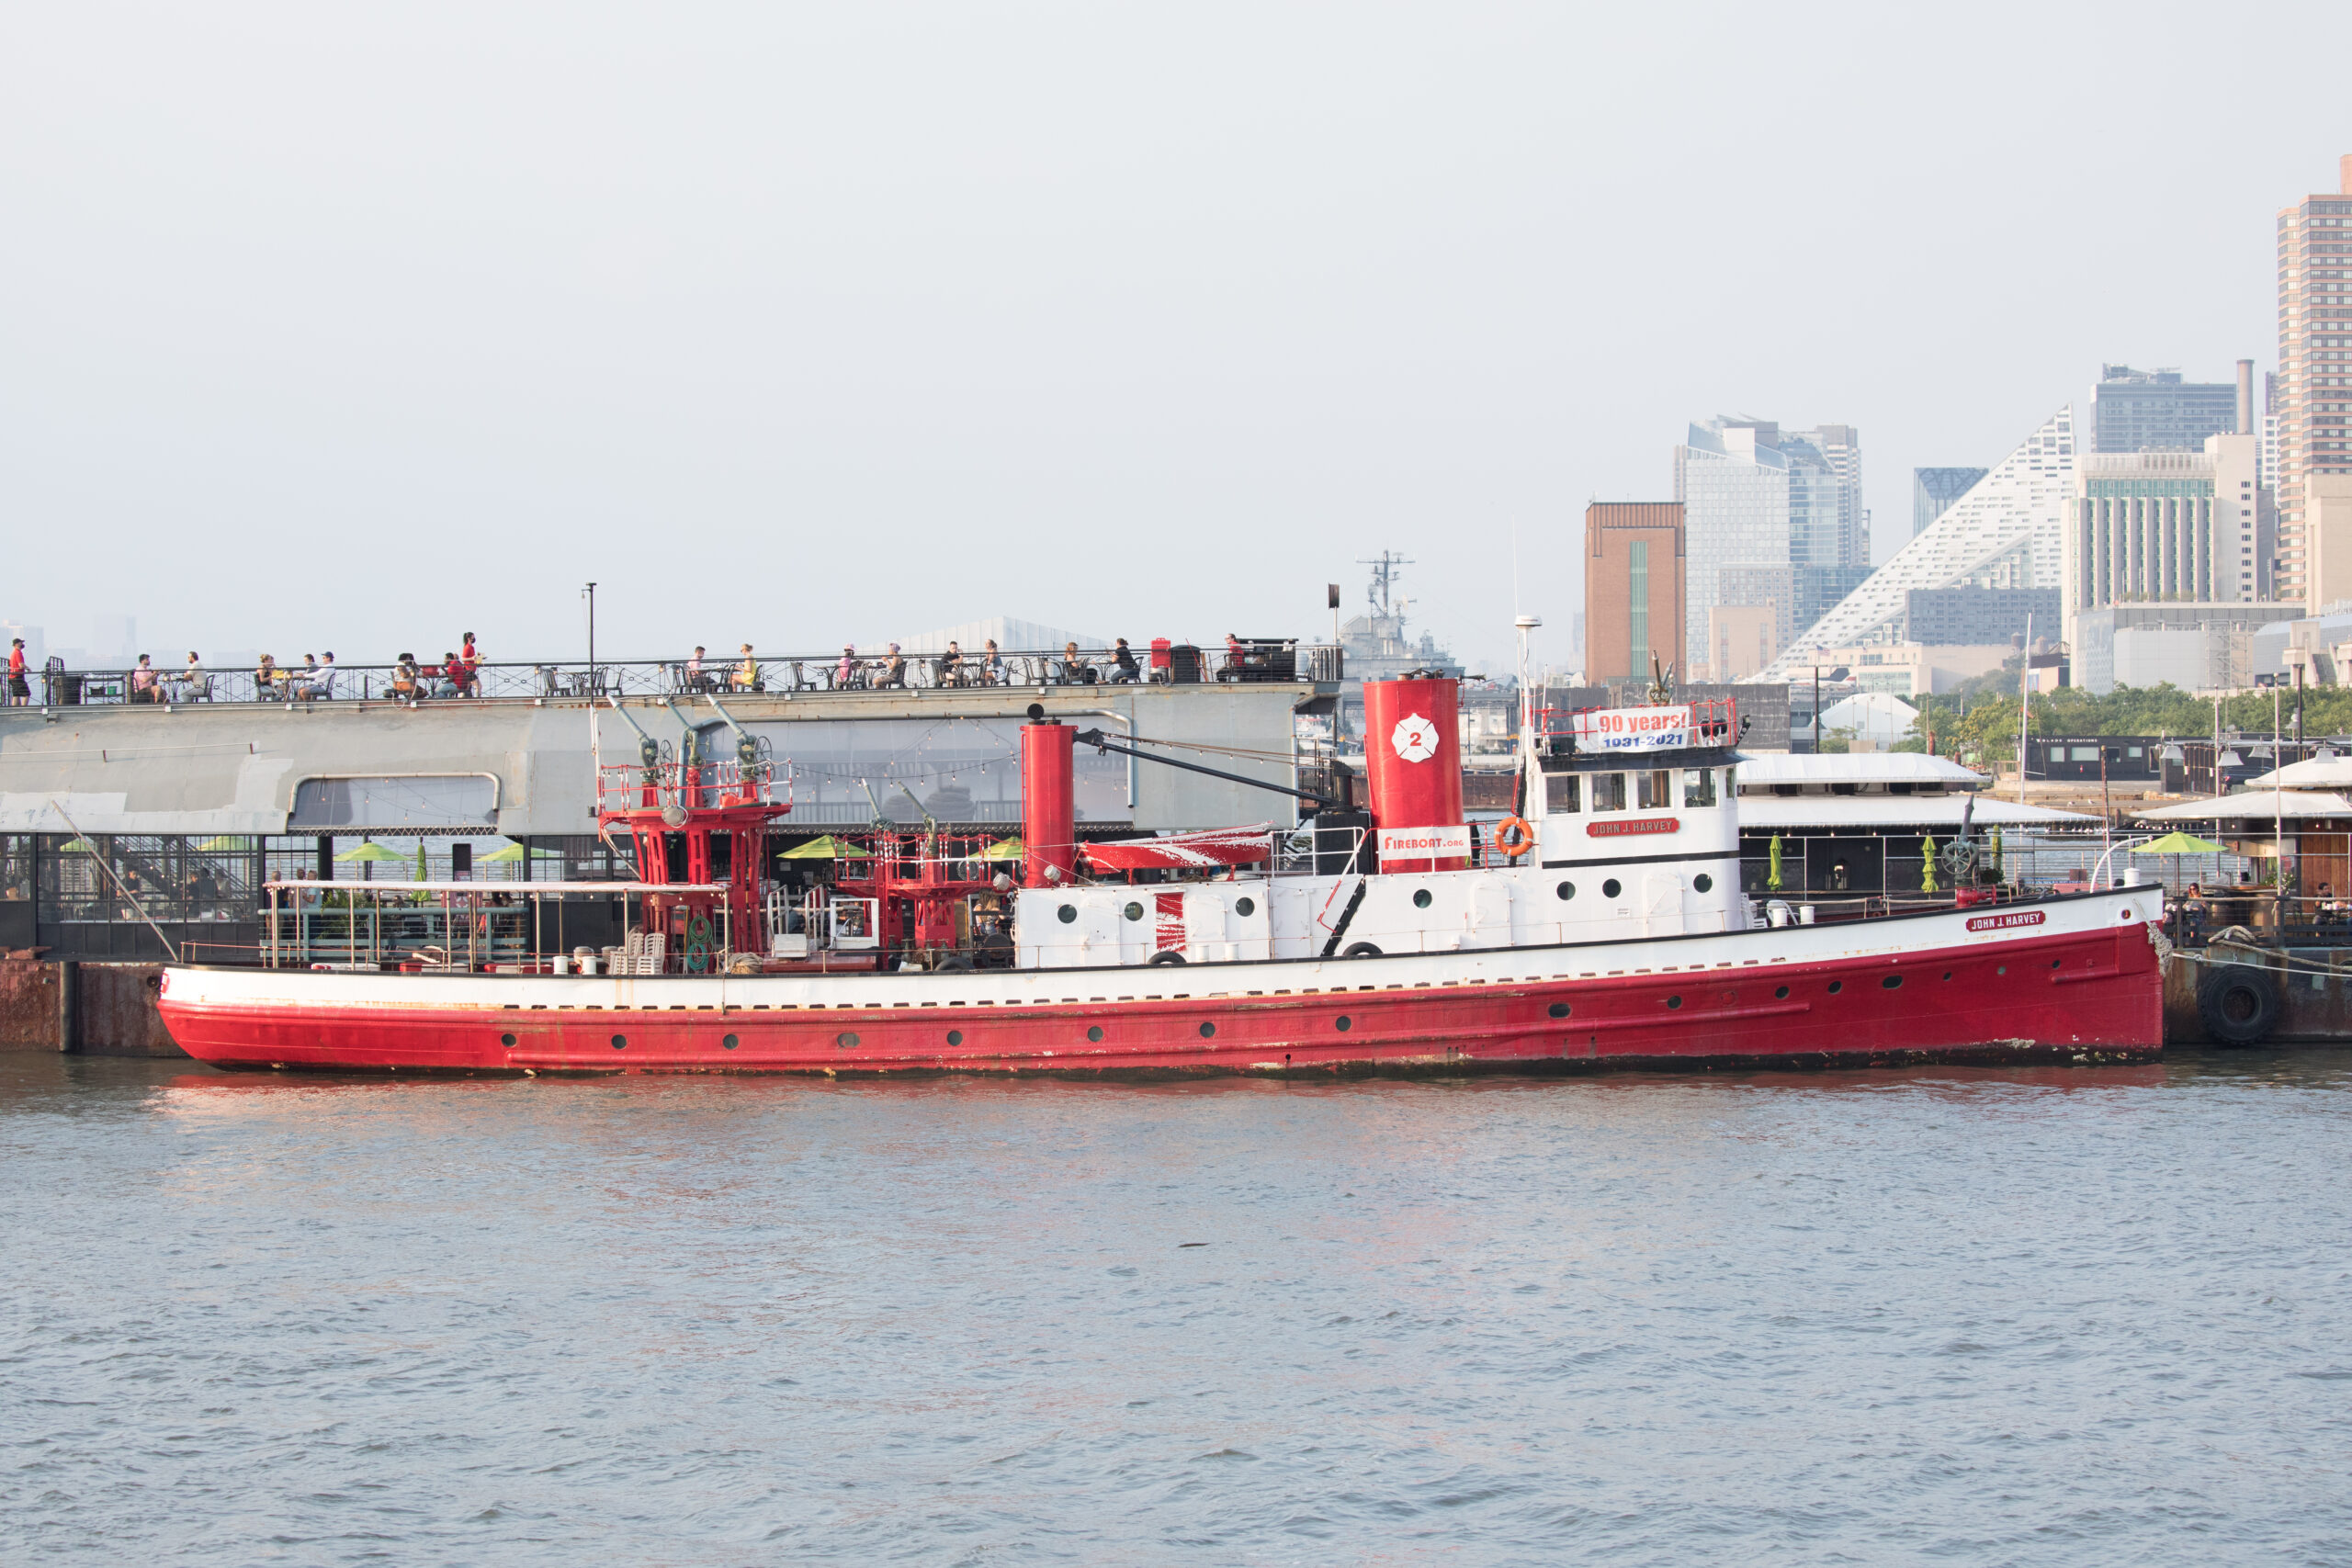 The privately owned John J. Harvey boat docked at Hudson River Park's Pier 66